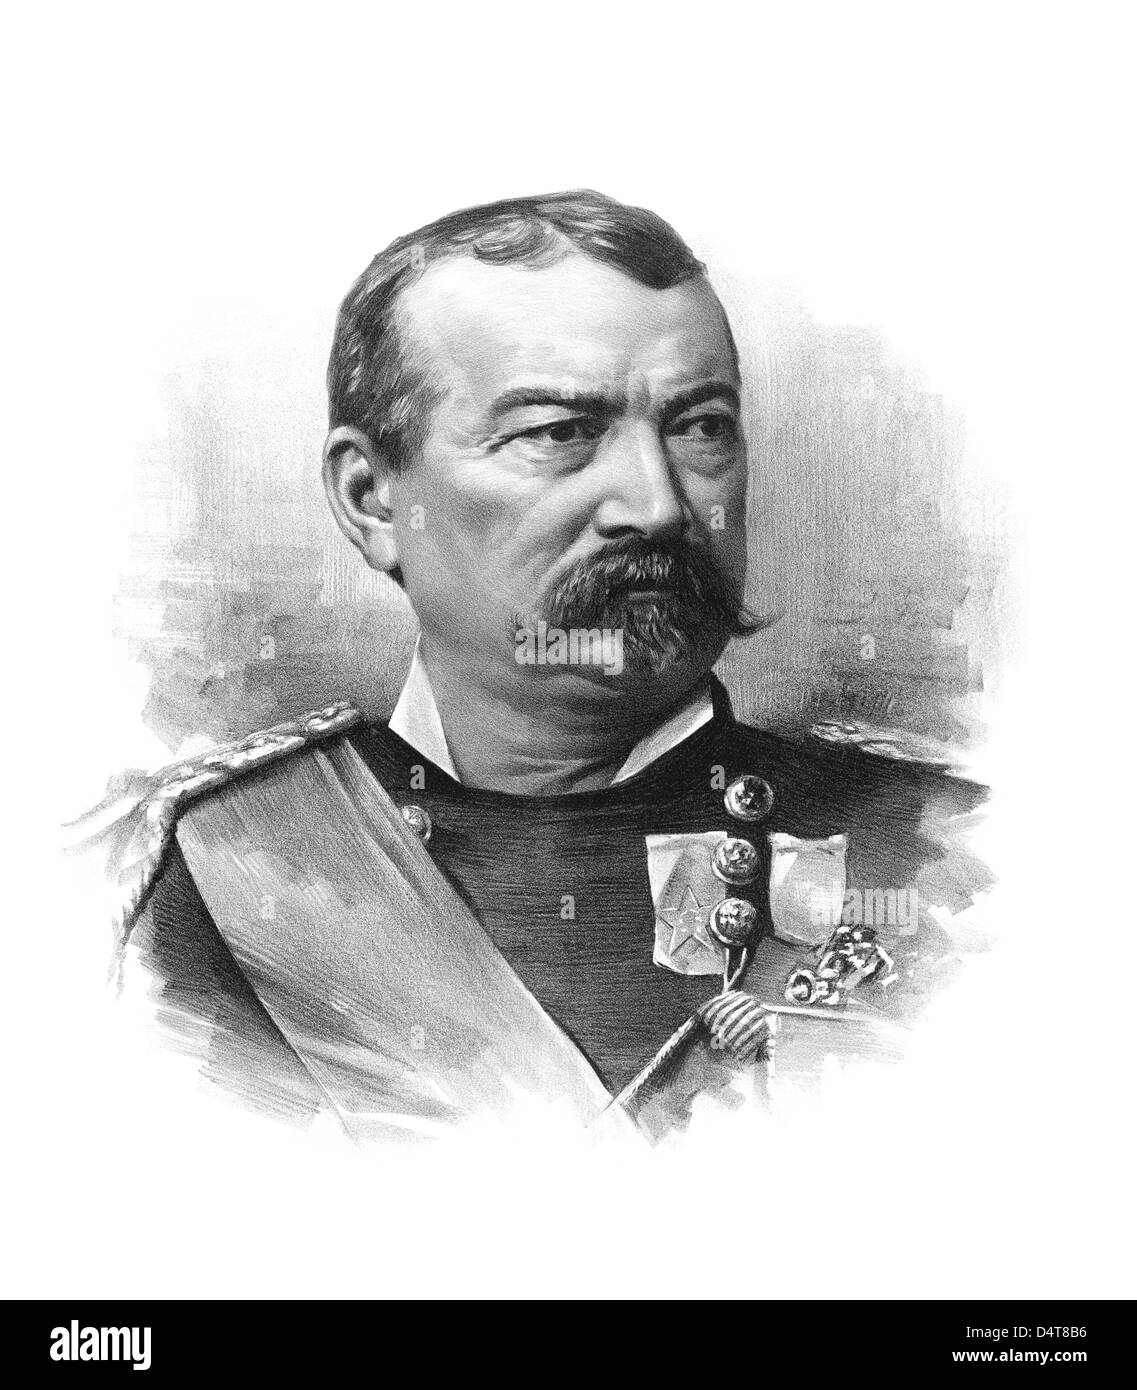 Vintage Civil War portrait of General Philip Sheridan. Stock Photo